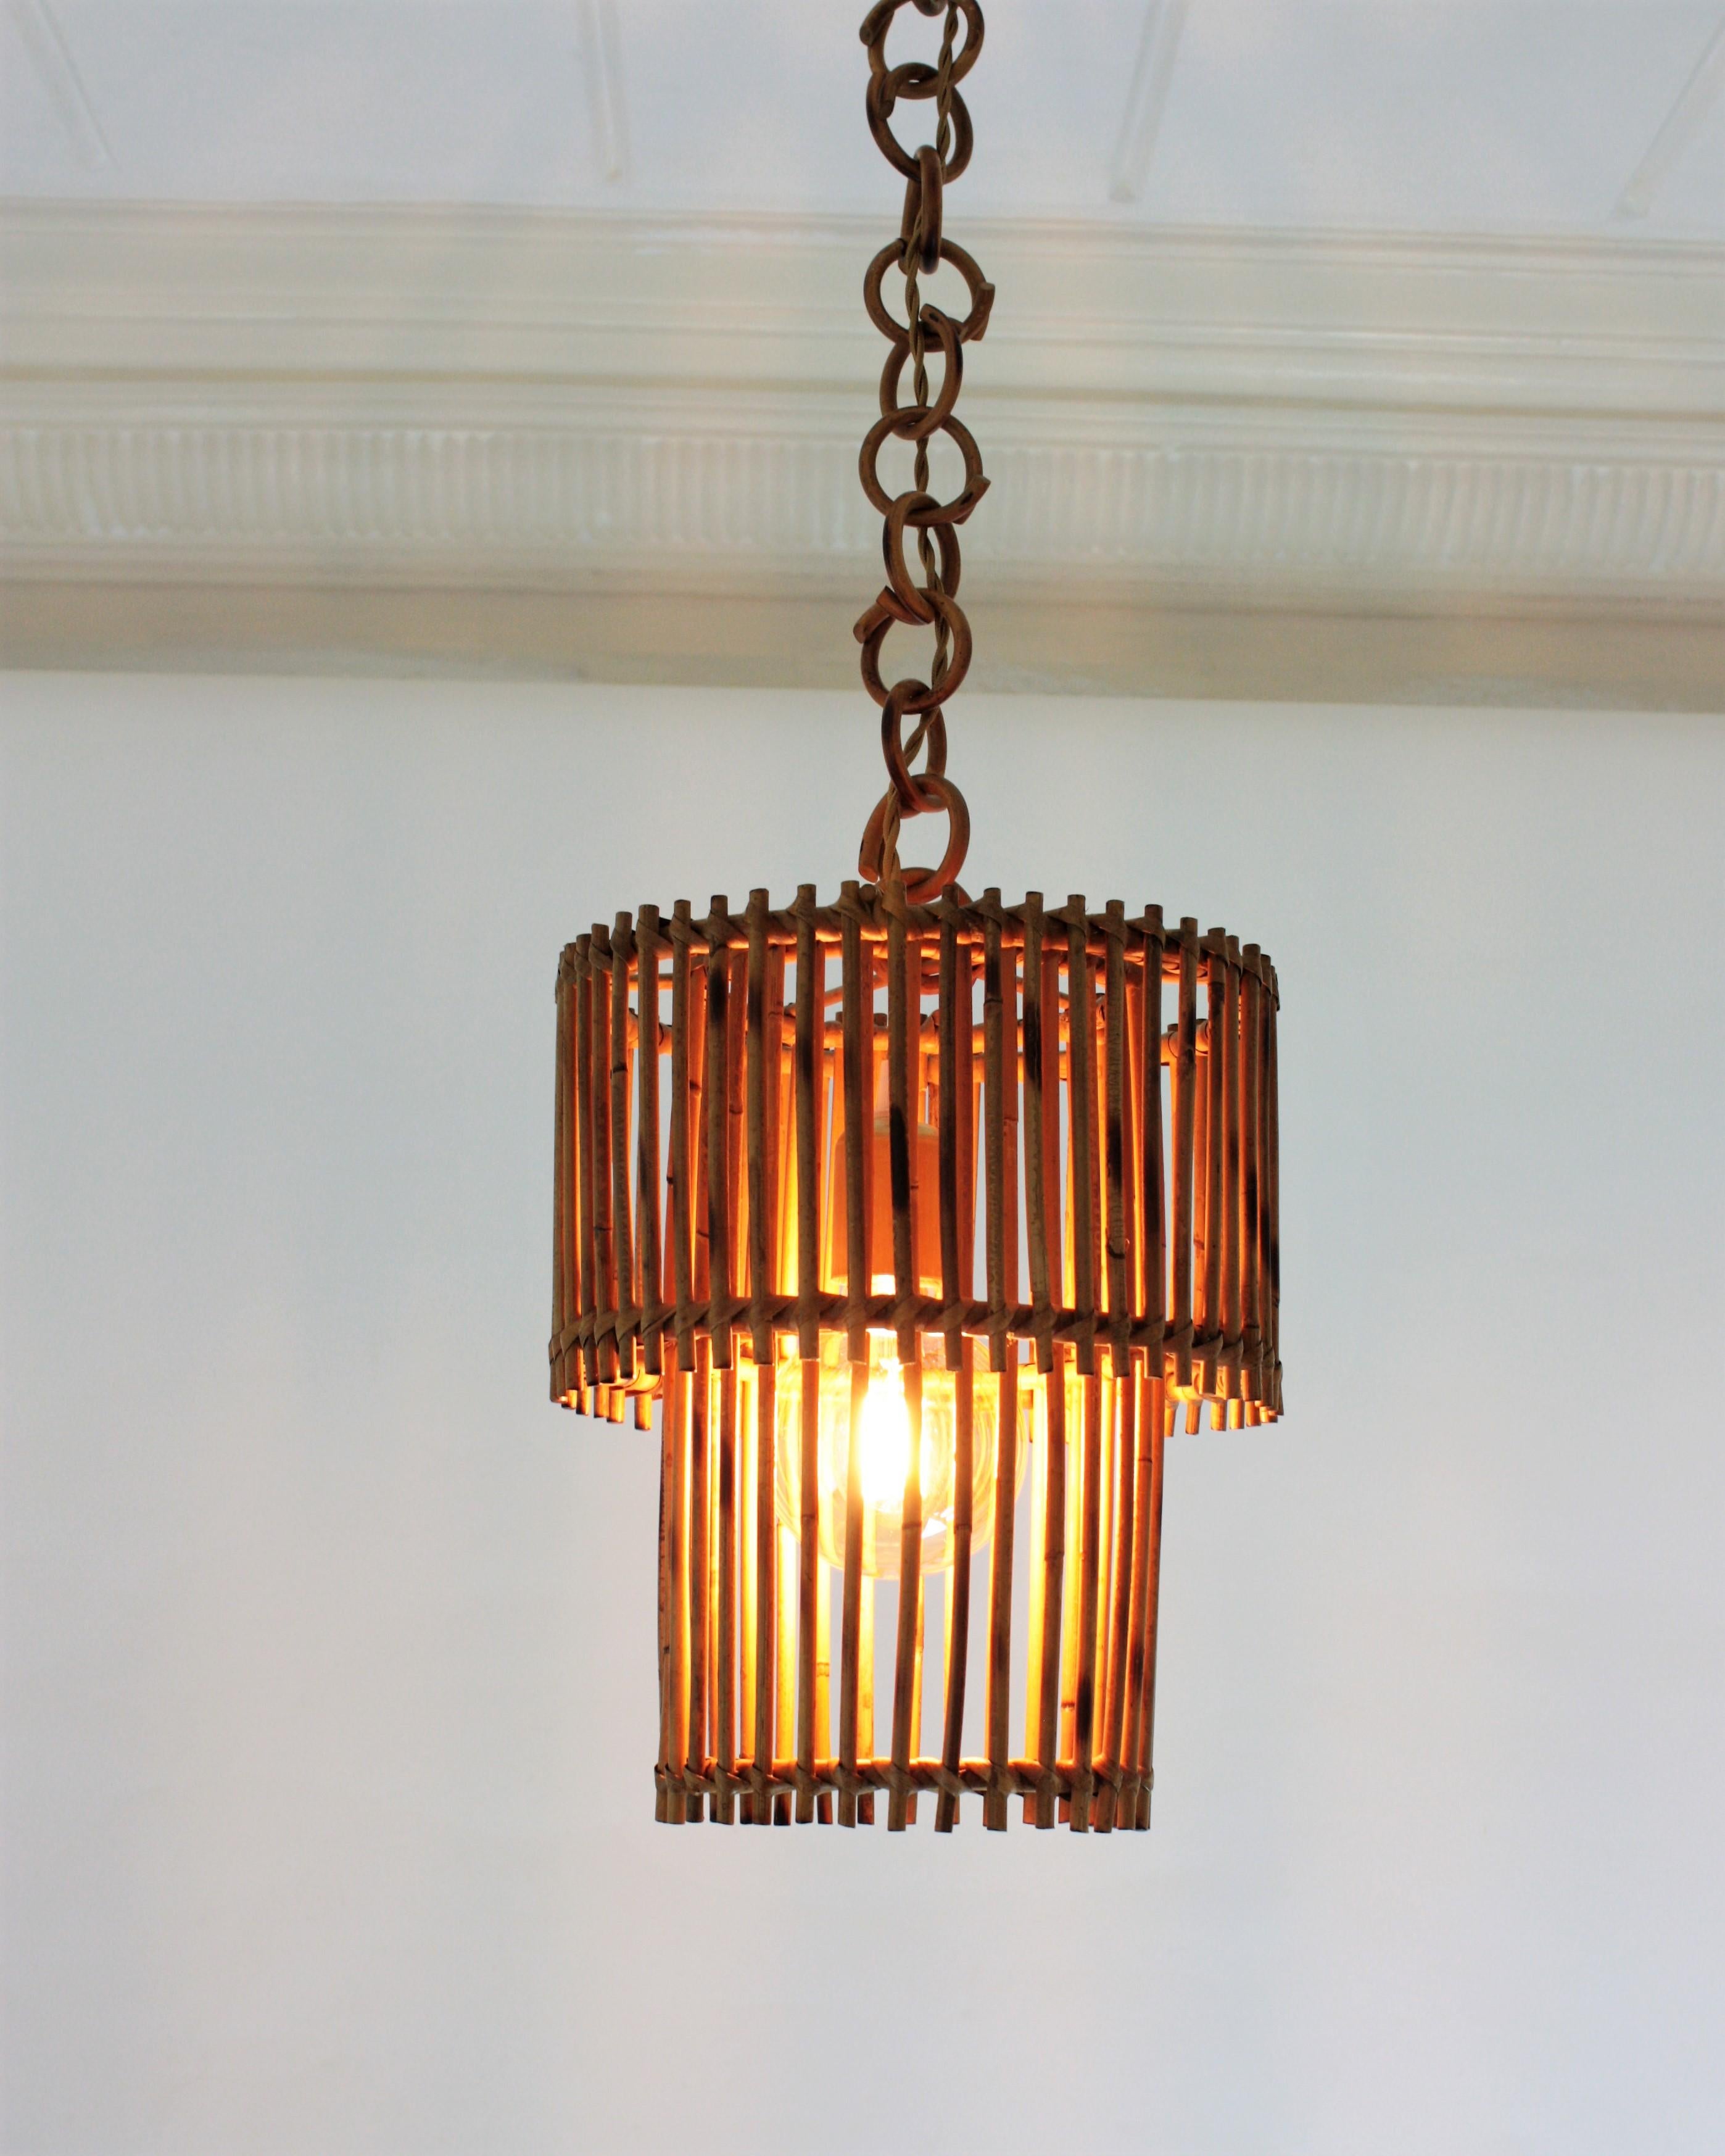  Rattan Cylinder Pendant Hanging Light or Lantern, 1960s For Sale 2